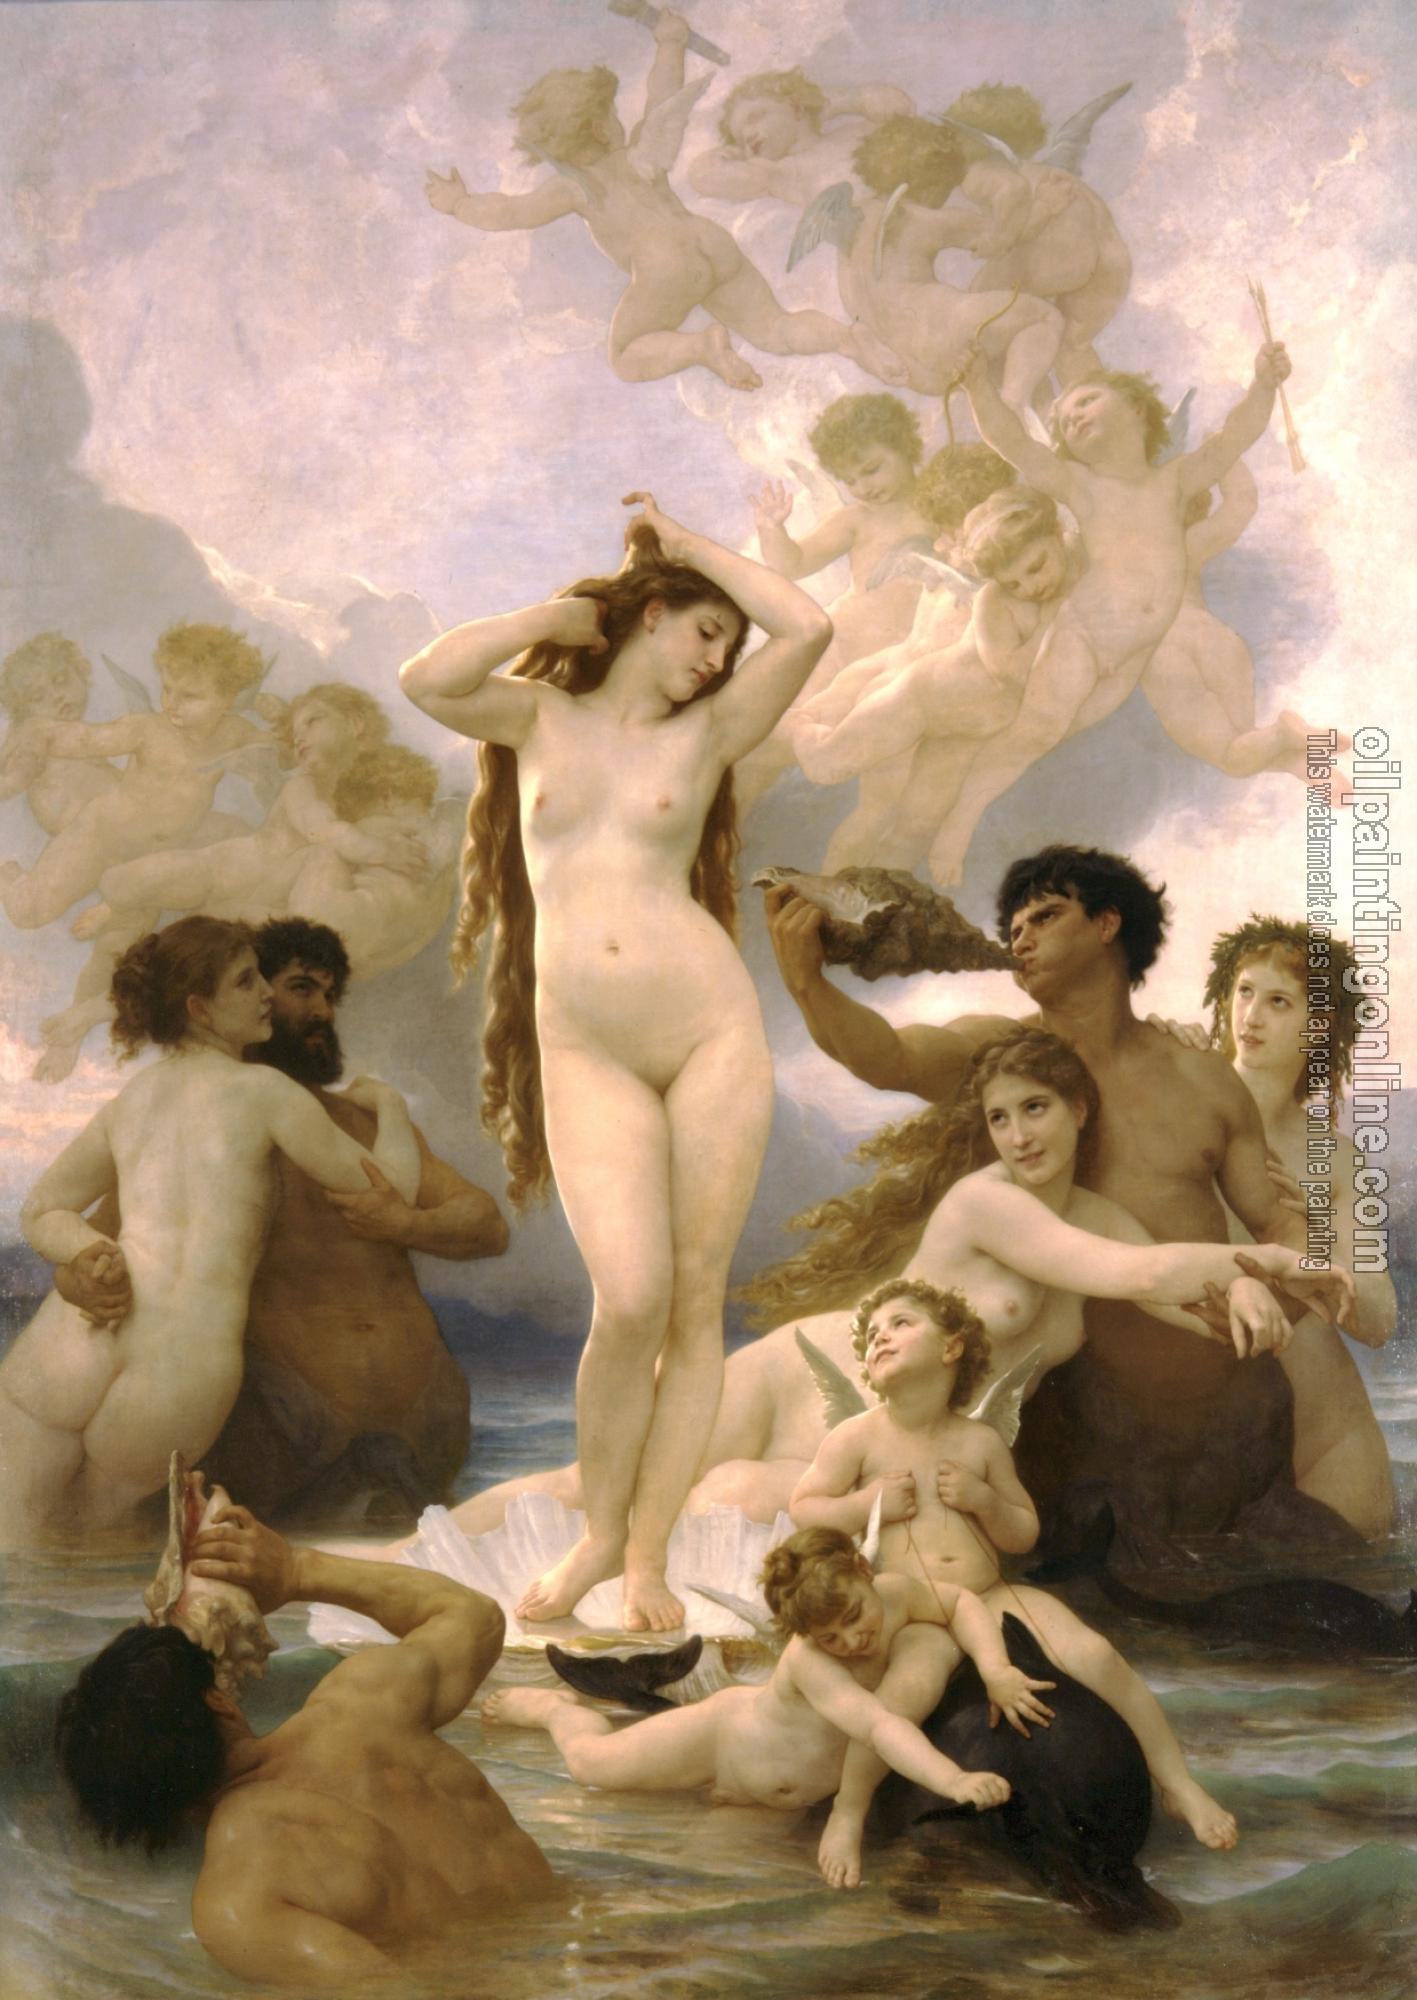 Bouguereau, William-Adolphe - Birth of Venus